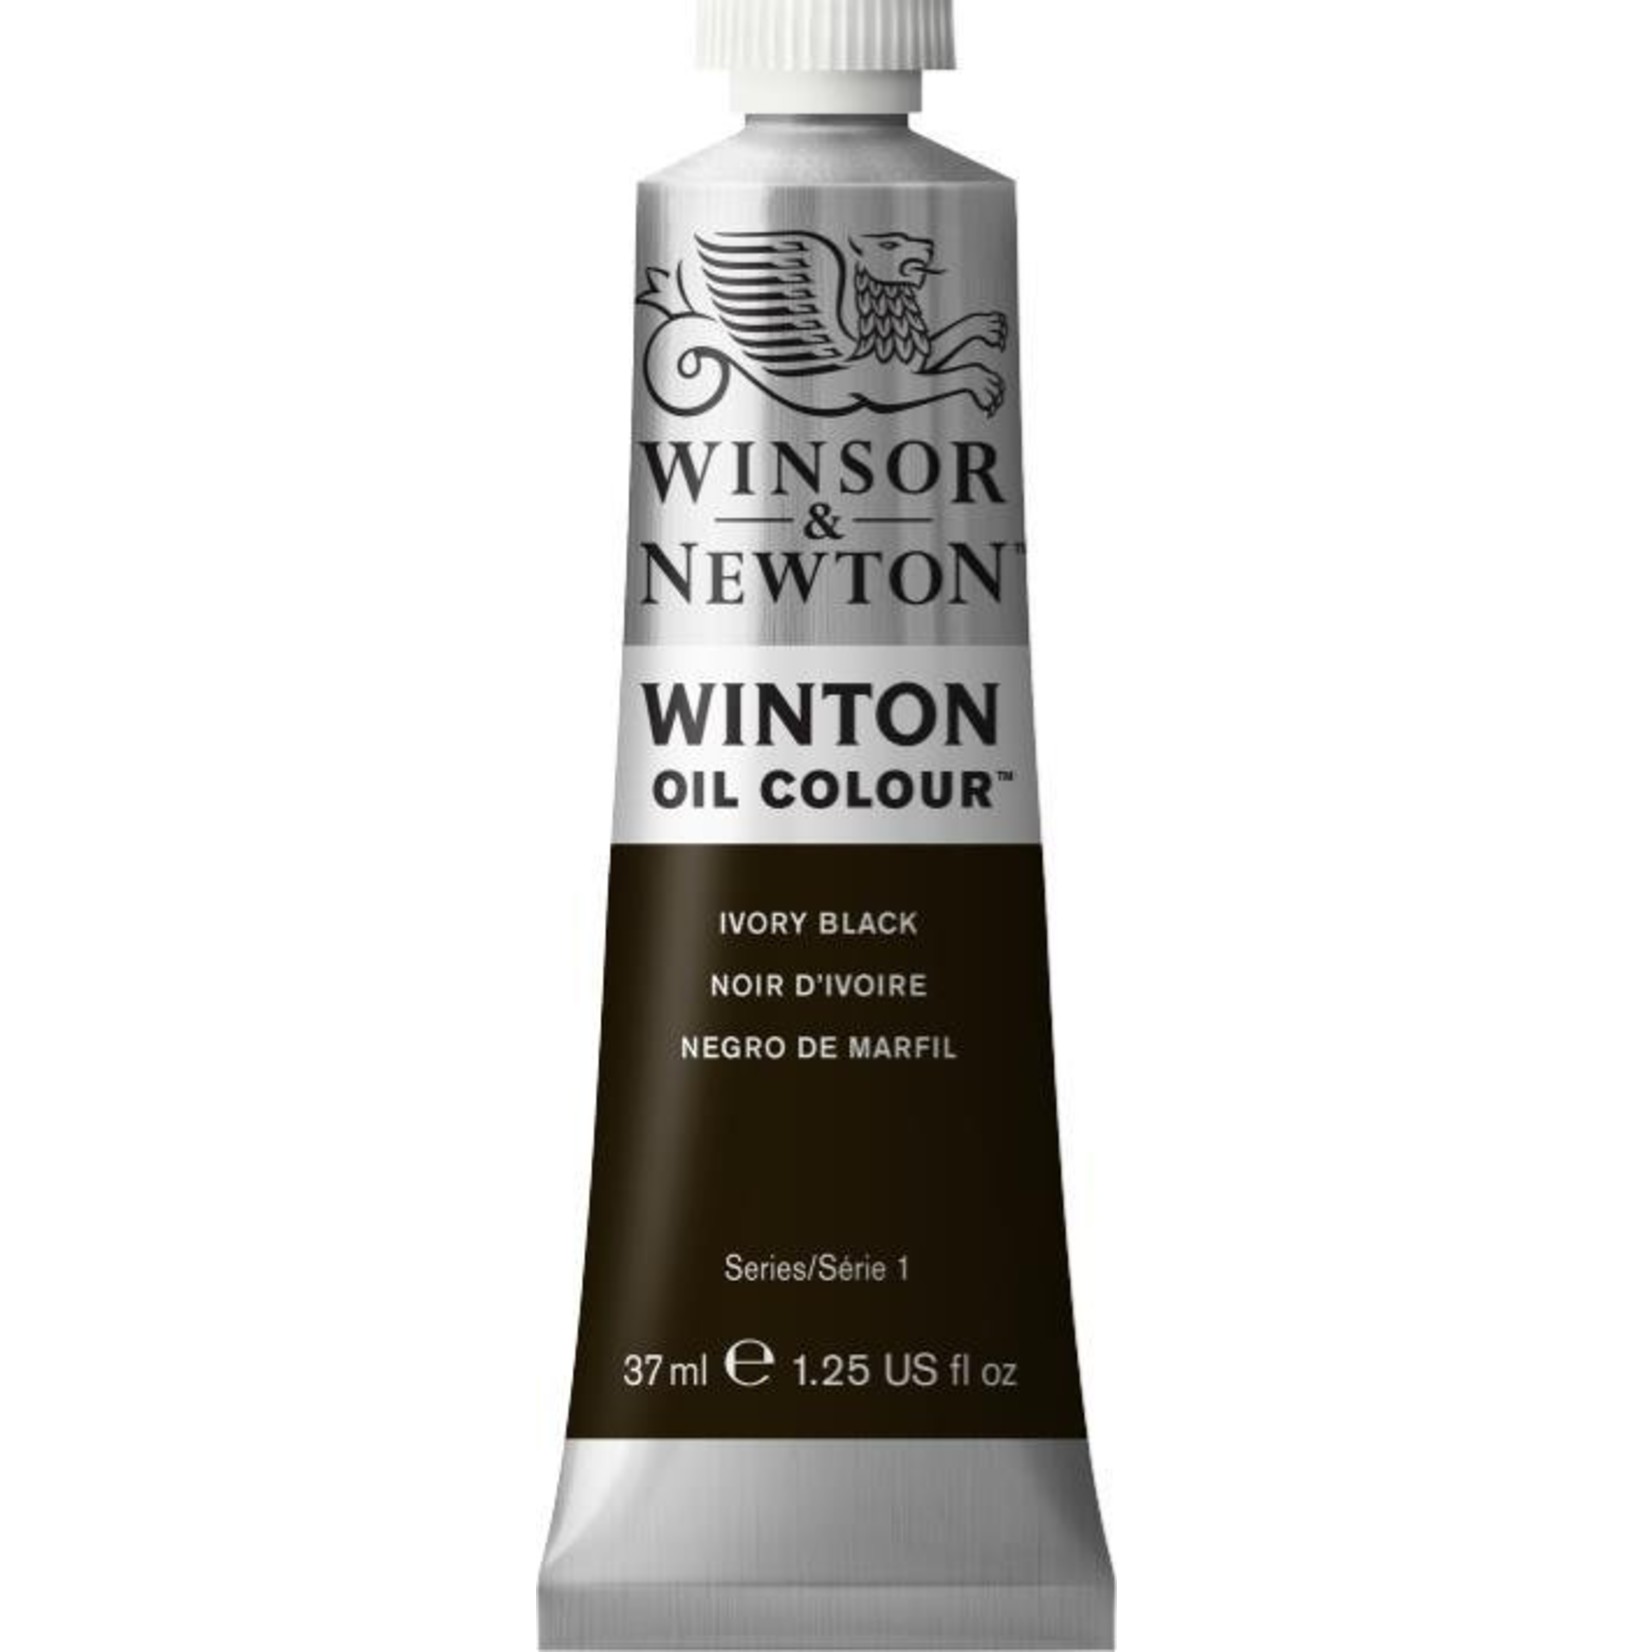 WINSOR NEWTON WINTON OIL COLOUR IVORY BLACK 37ML